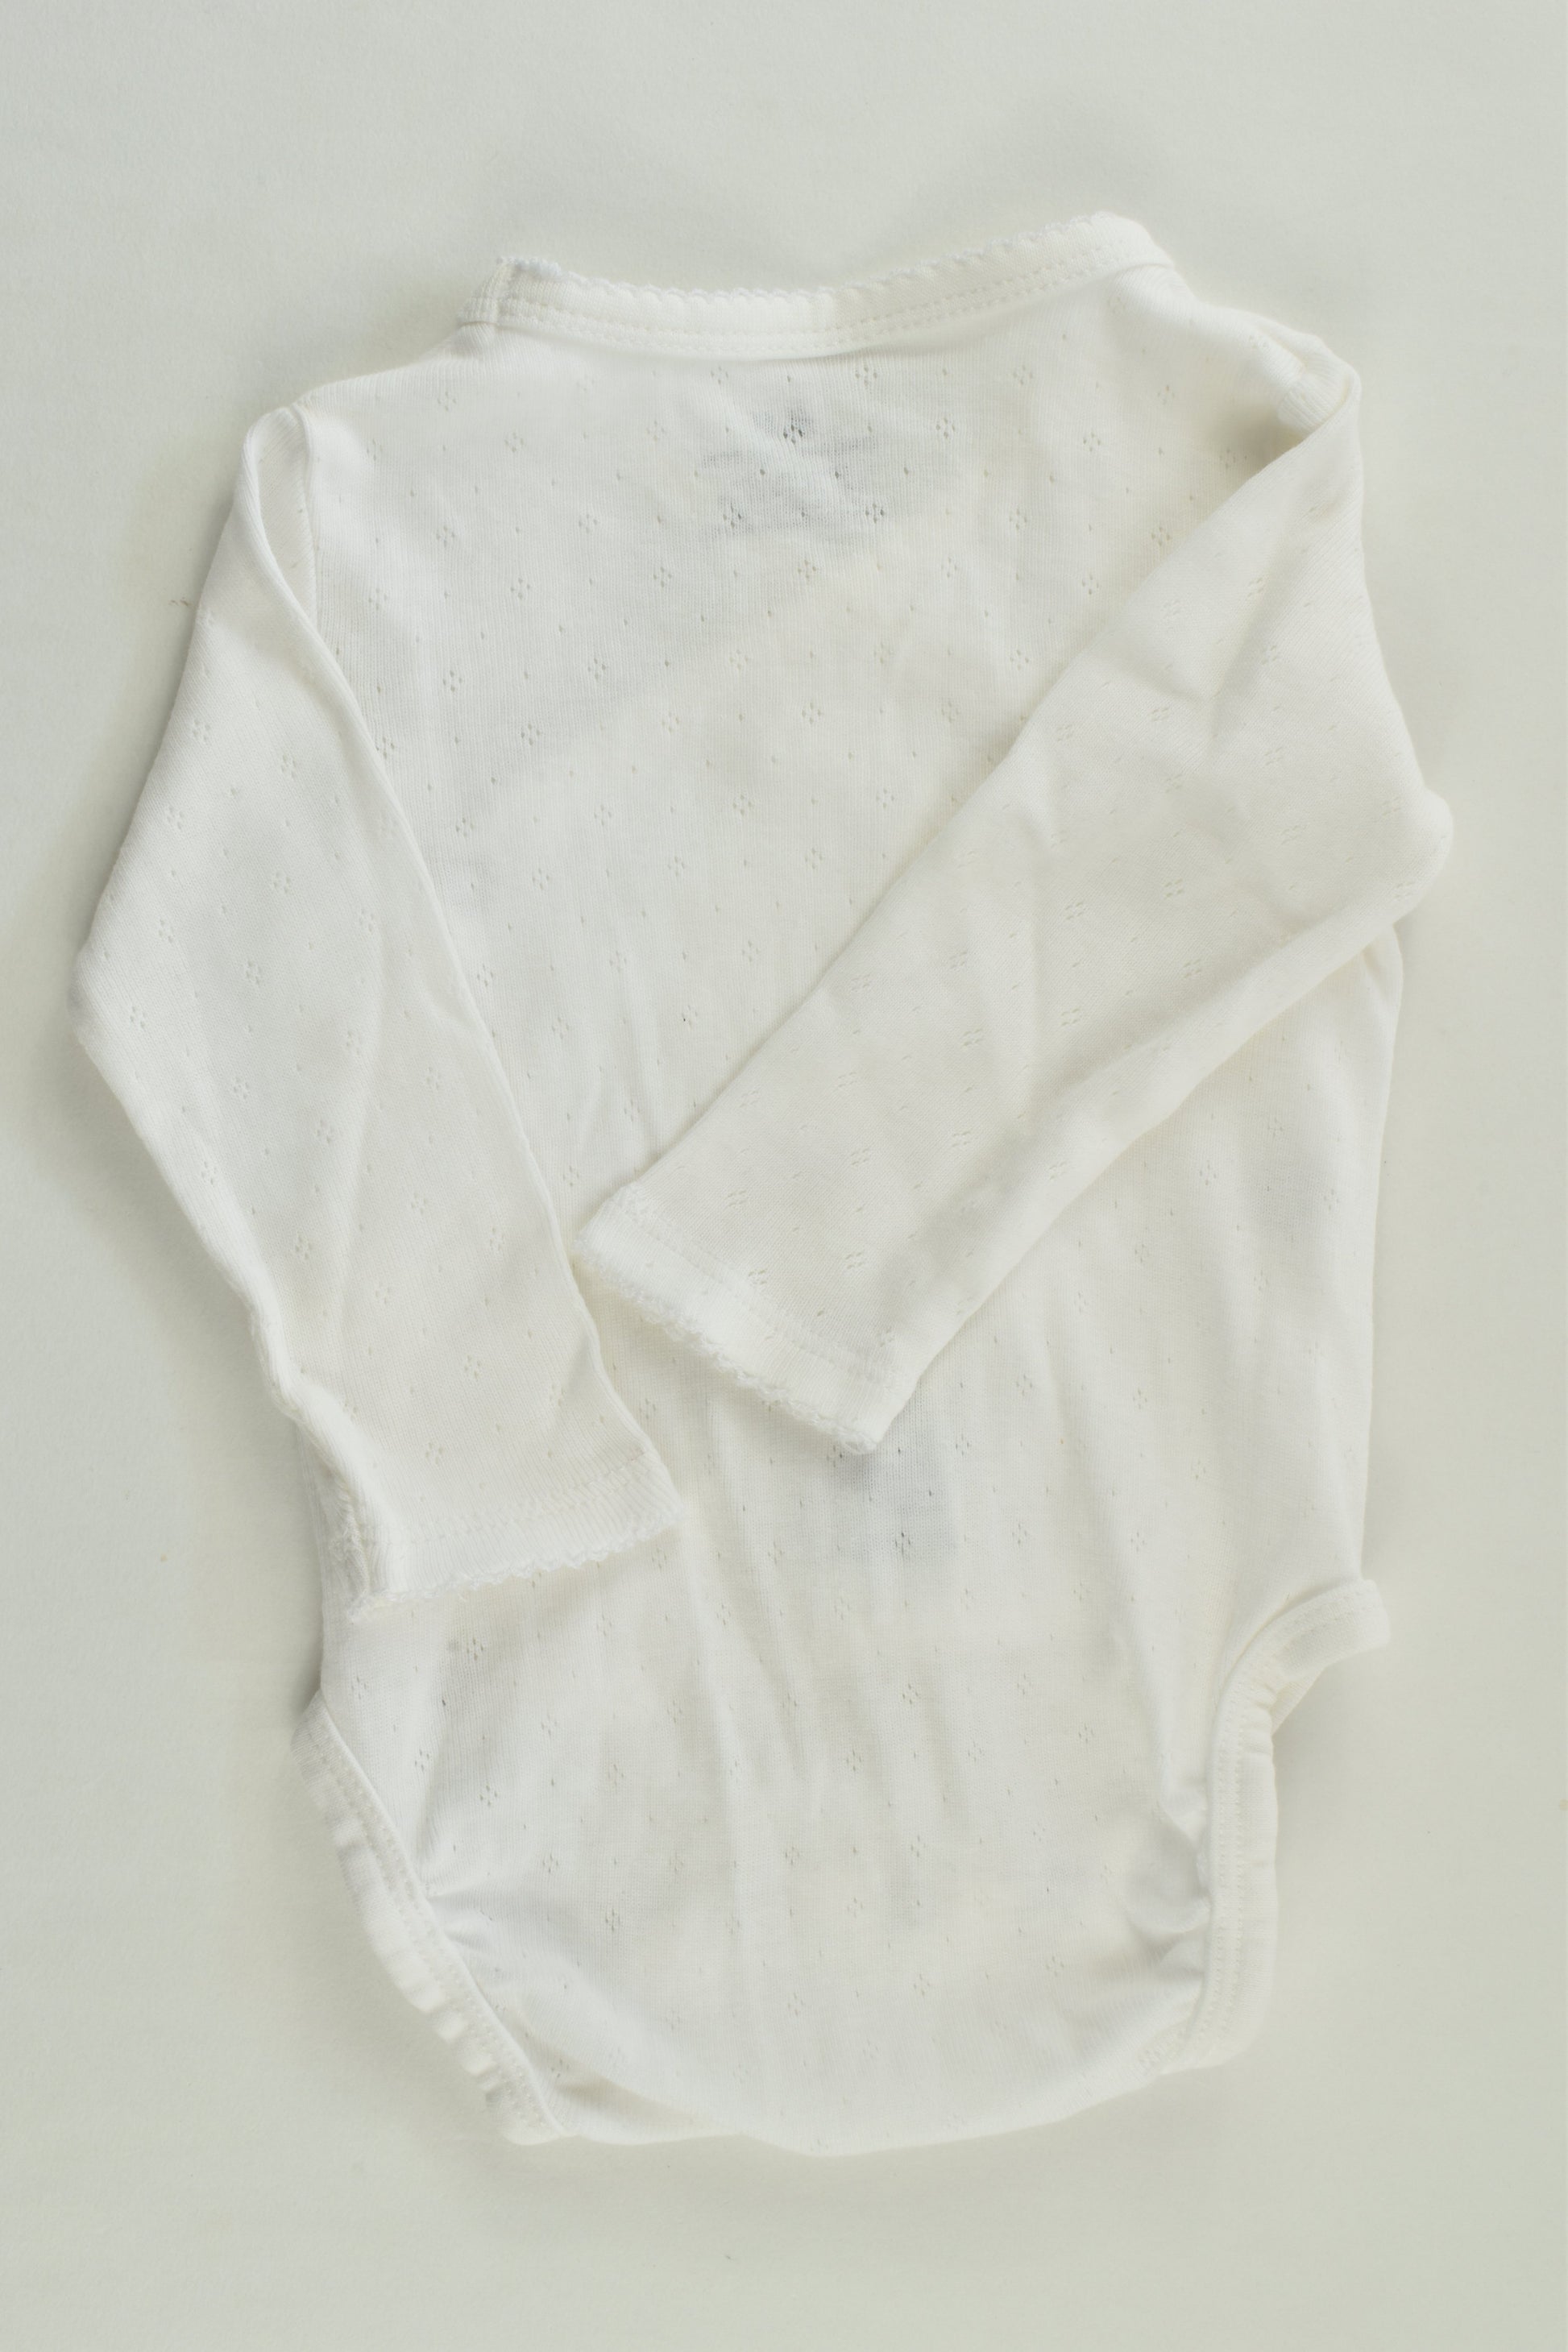 H&M Size 0000 (56 cm) Organic Wrap Bodysuit